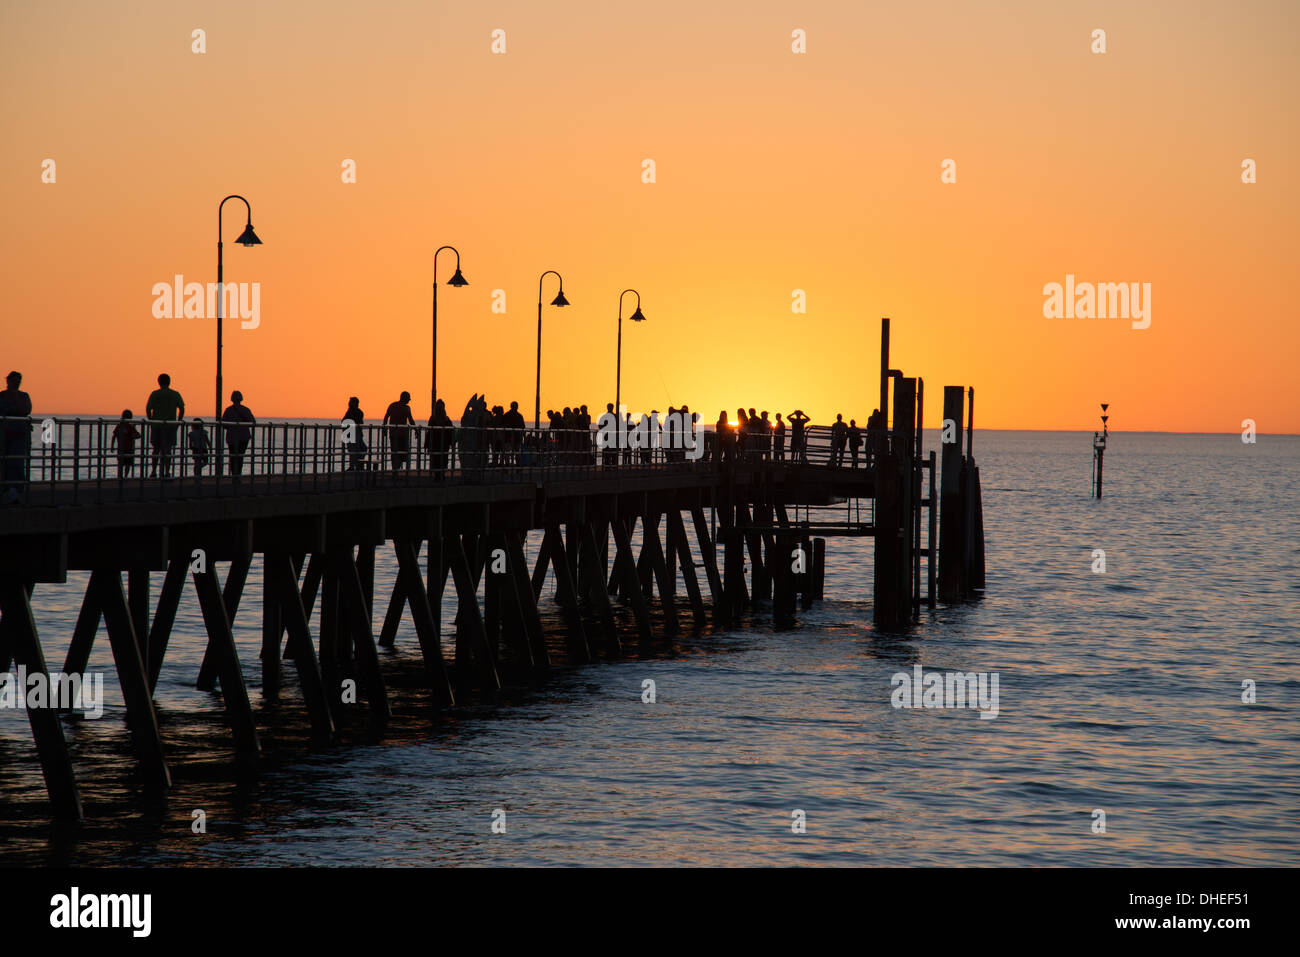 People enjoying a sunset walk along the pier at Glenelg jetty Australia in Summer Stock Photo